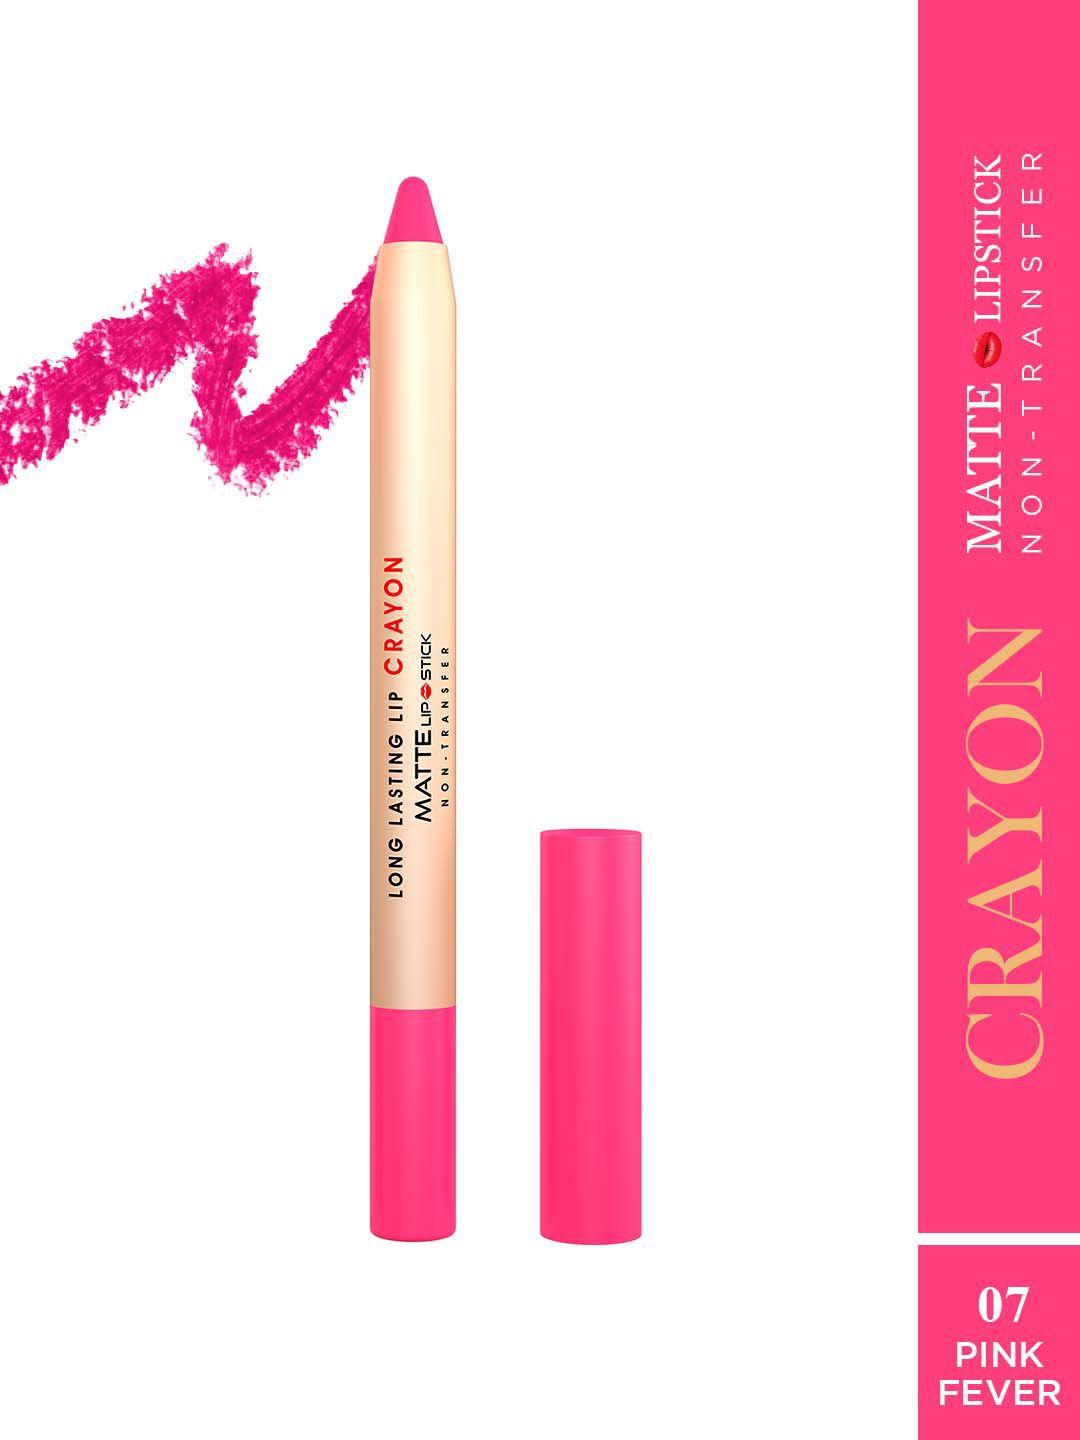 shryoan long lasting lip crayon matte lipstick 3.8 g - pink fever 07